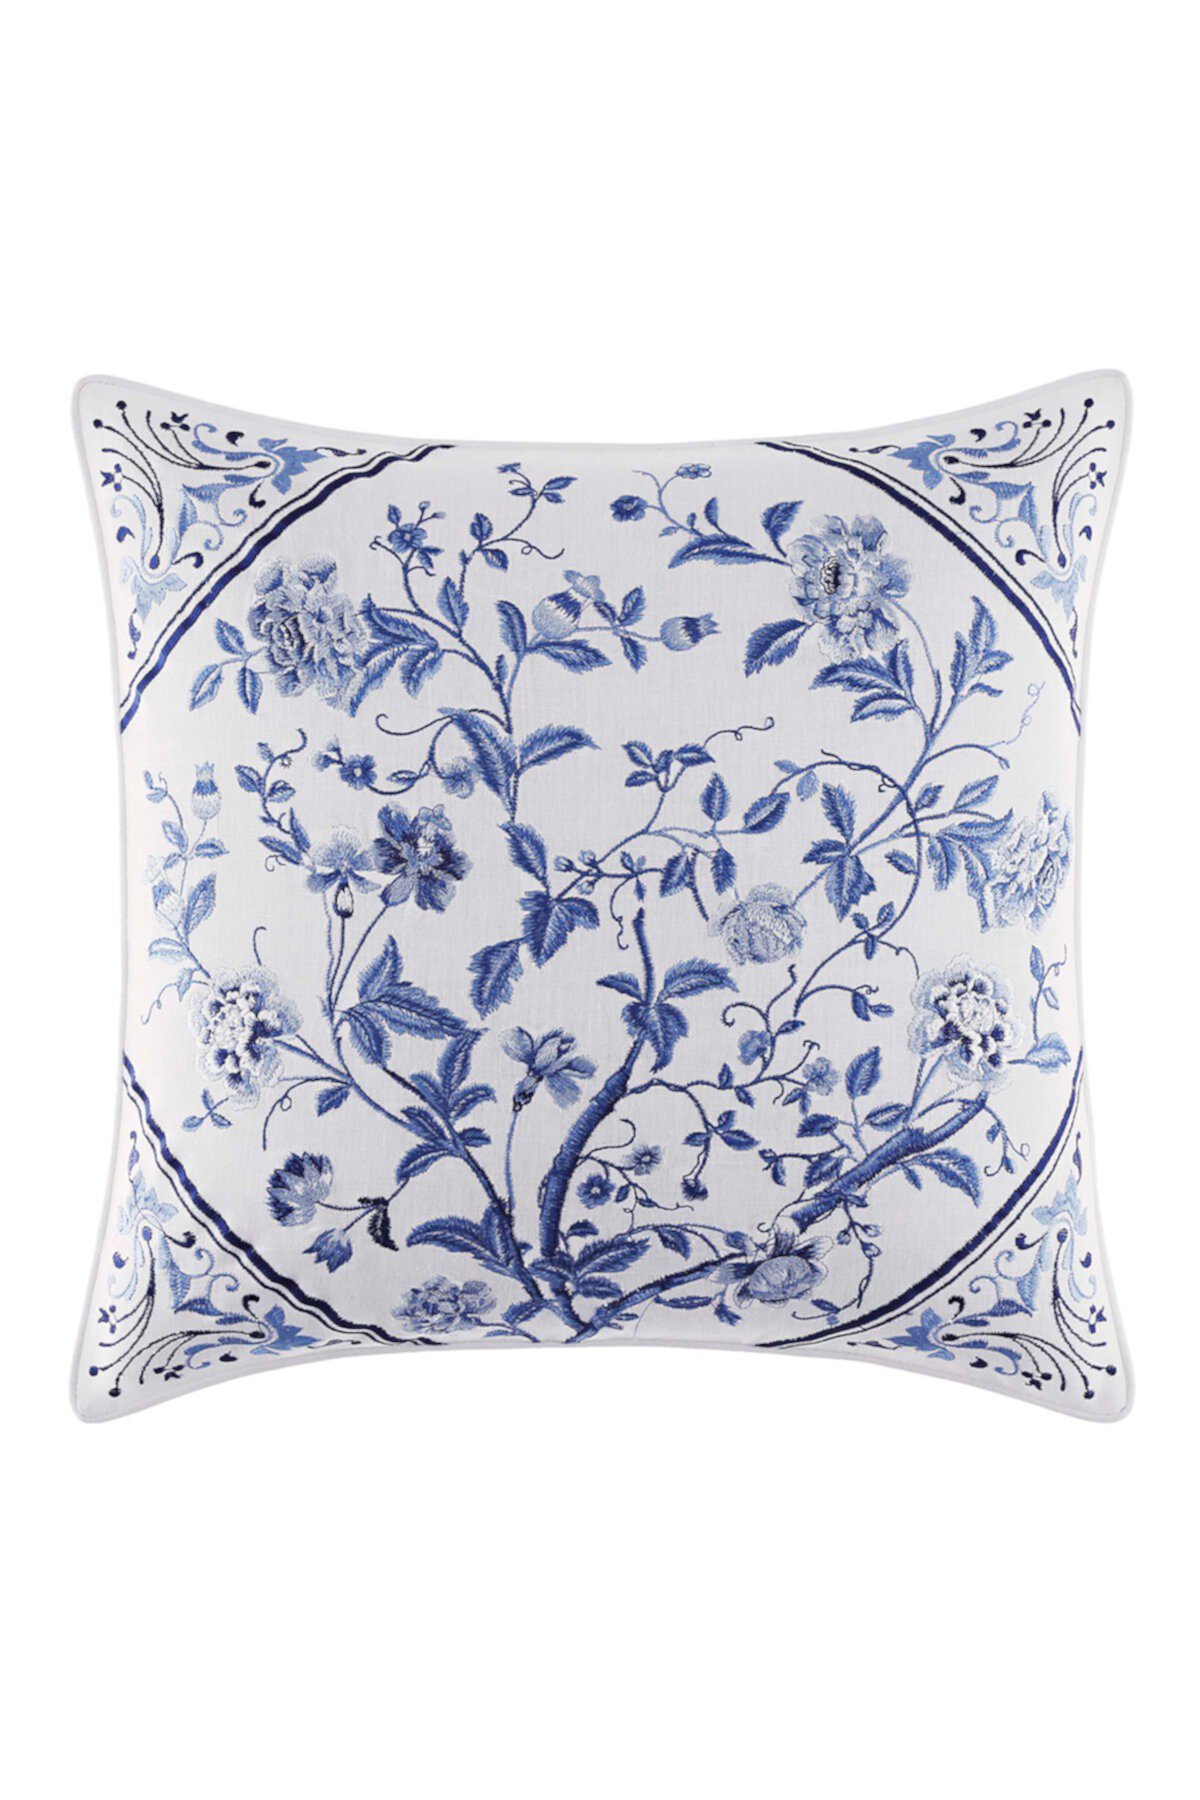 Charlotte China Blue 16" X 16" Decorative Pillow Laura Ashley